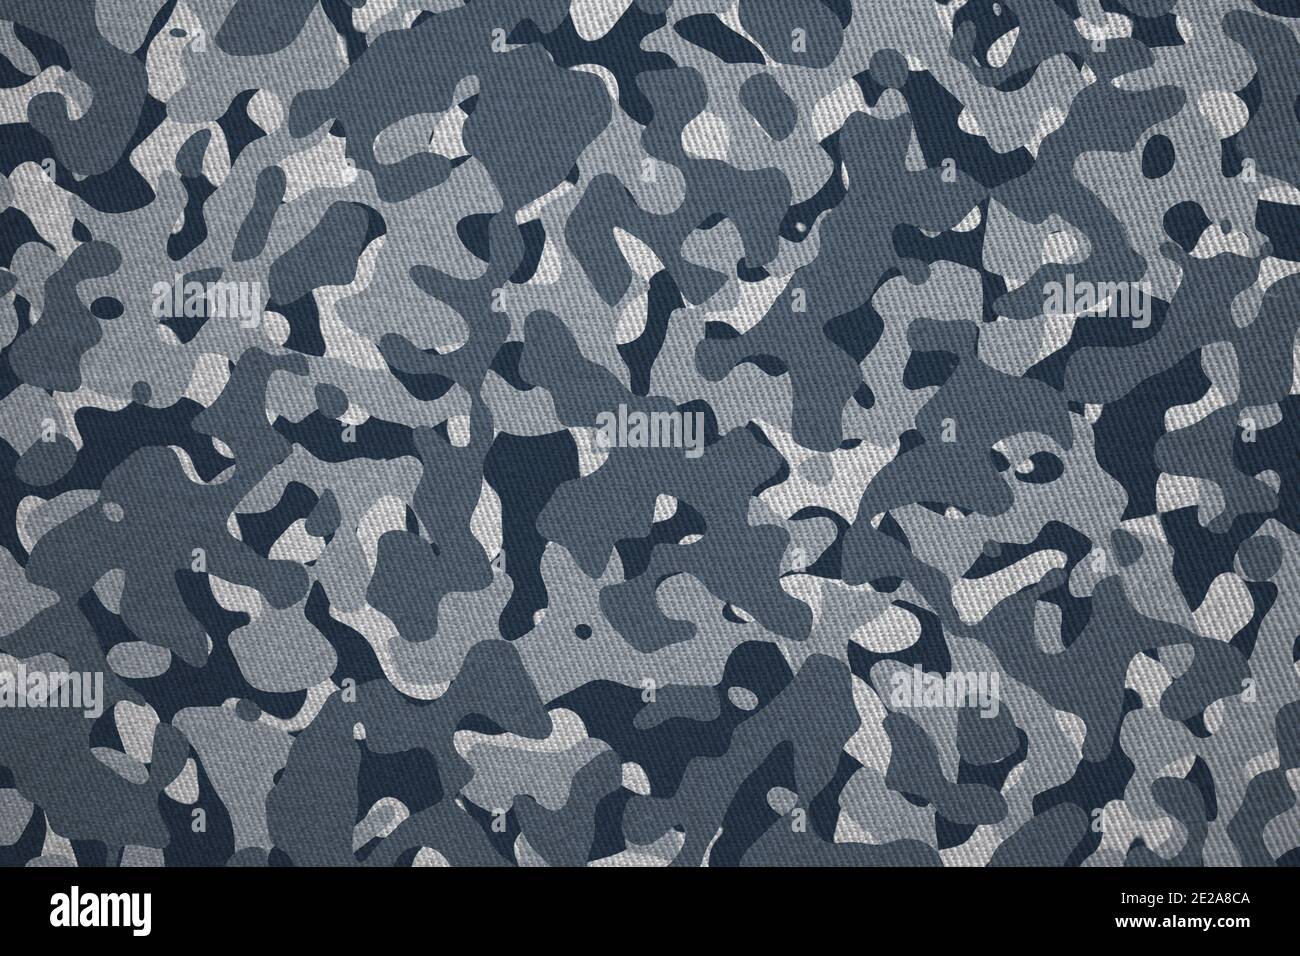 Blue, black, white, military camouflage pattern background. Army uniform camouflage texture illustration Stock Photo